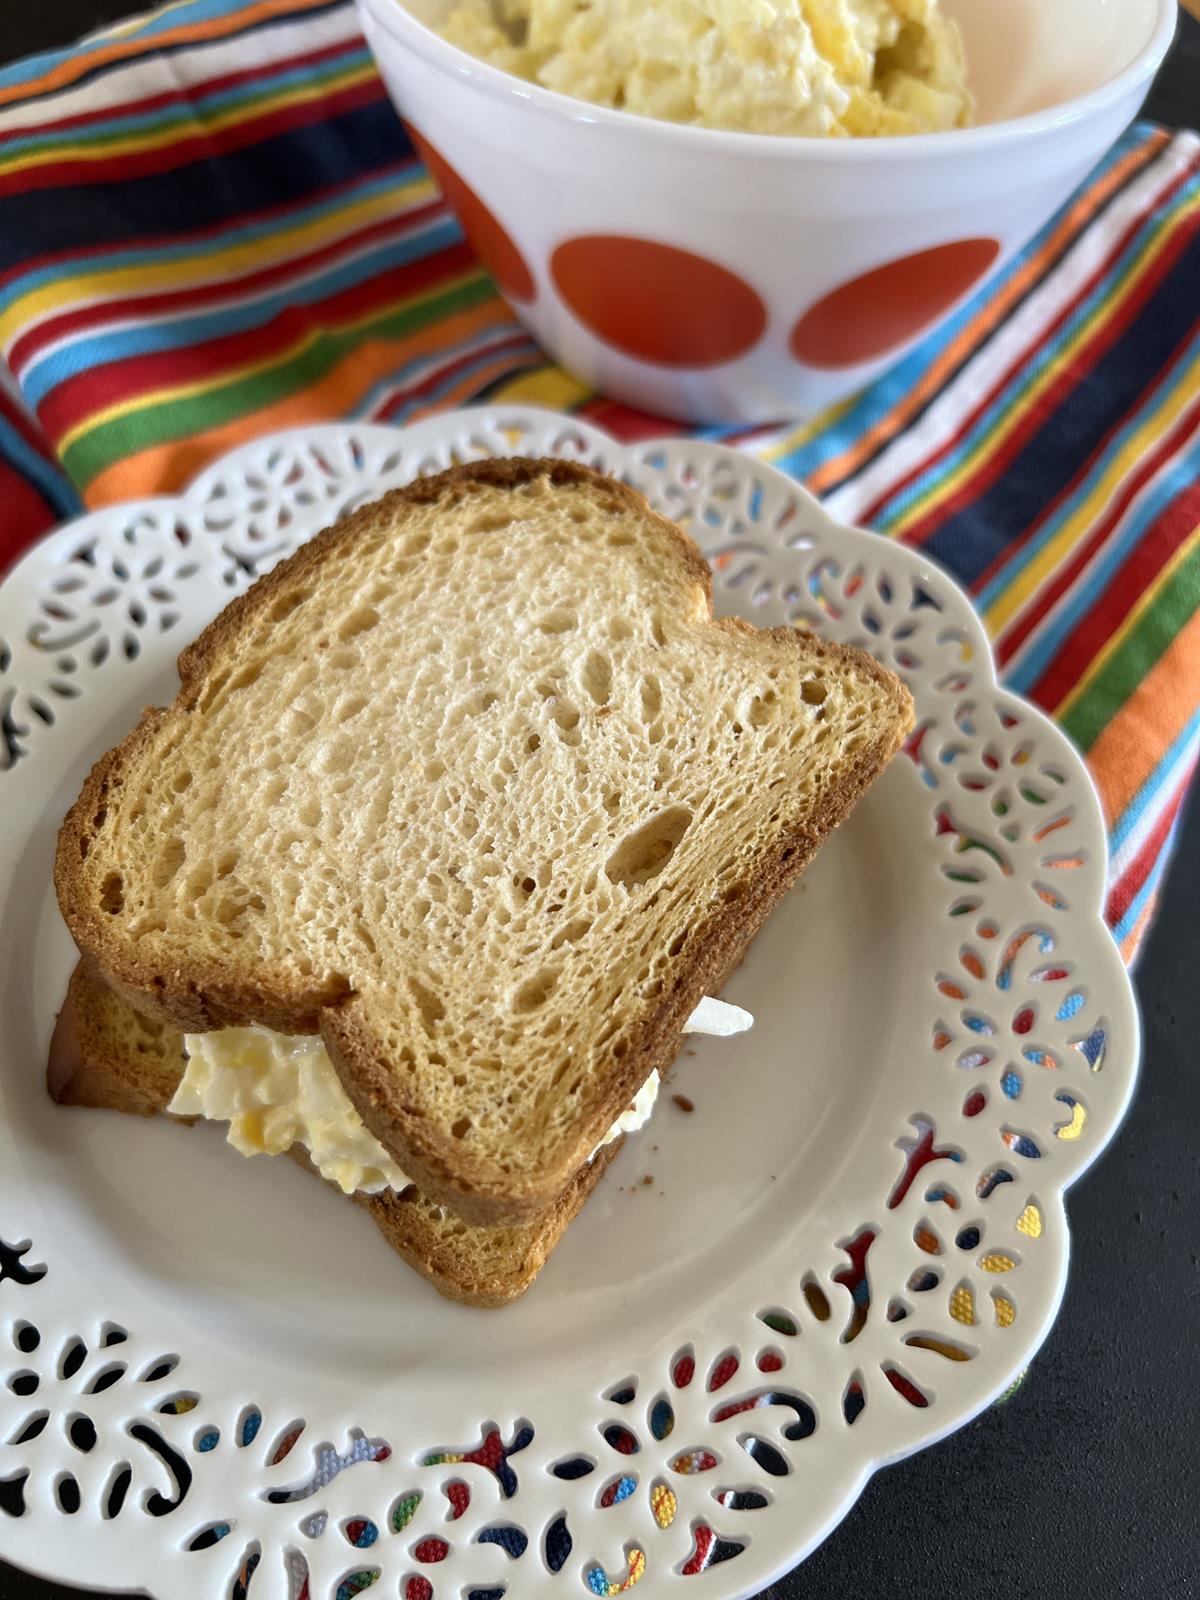 Egg salad sandwich on white plate on striped napkin